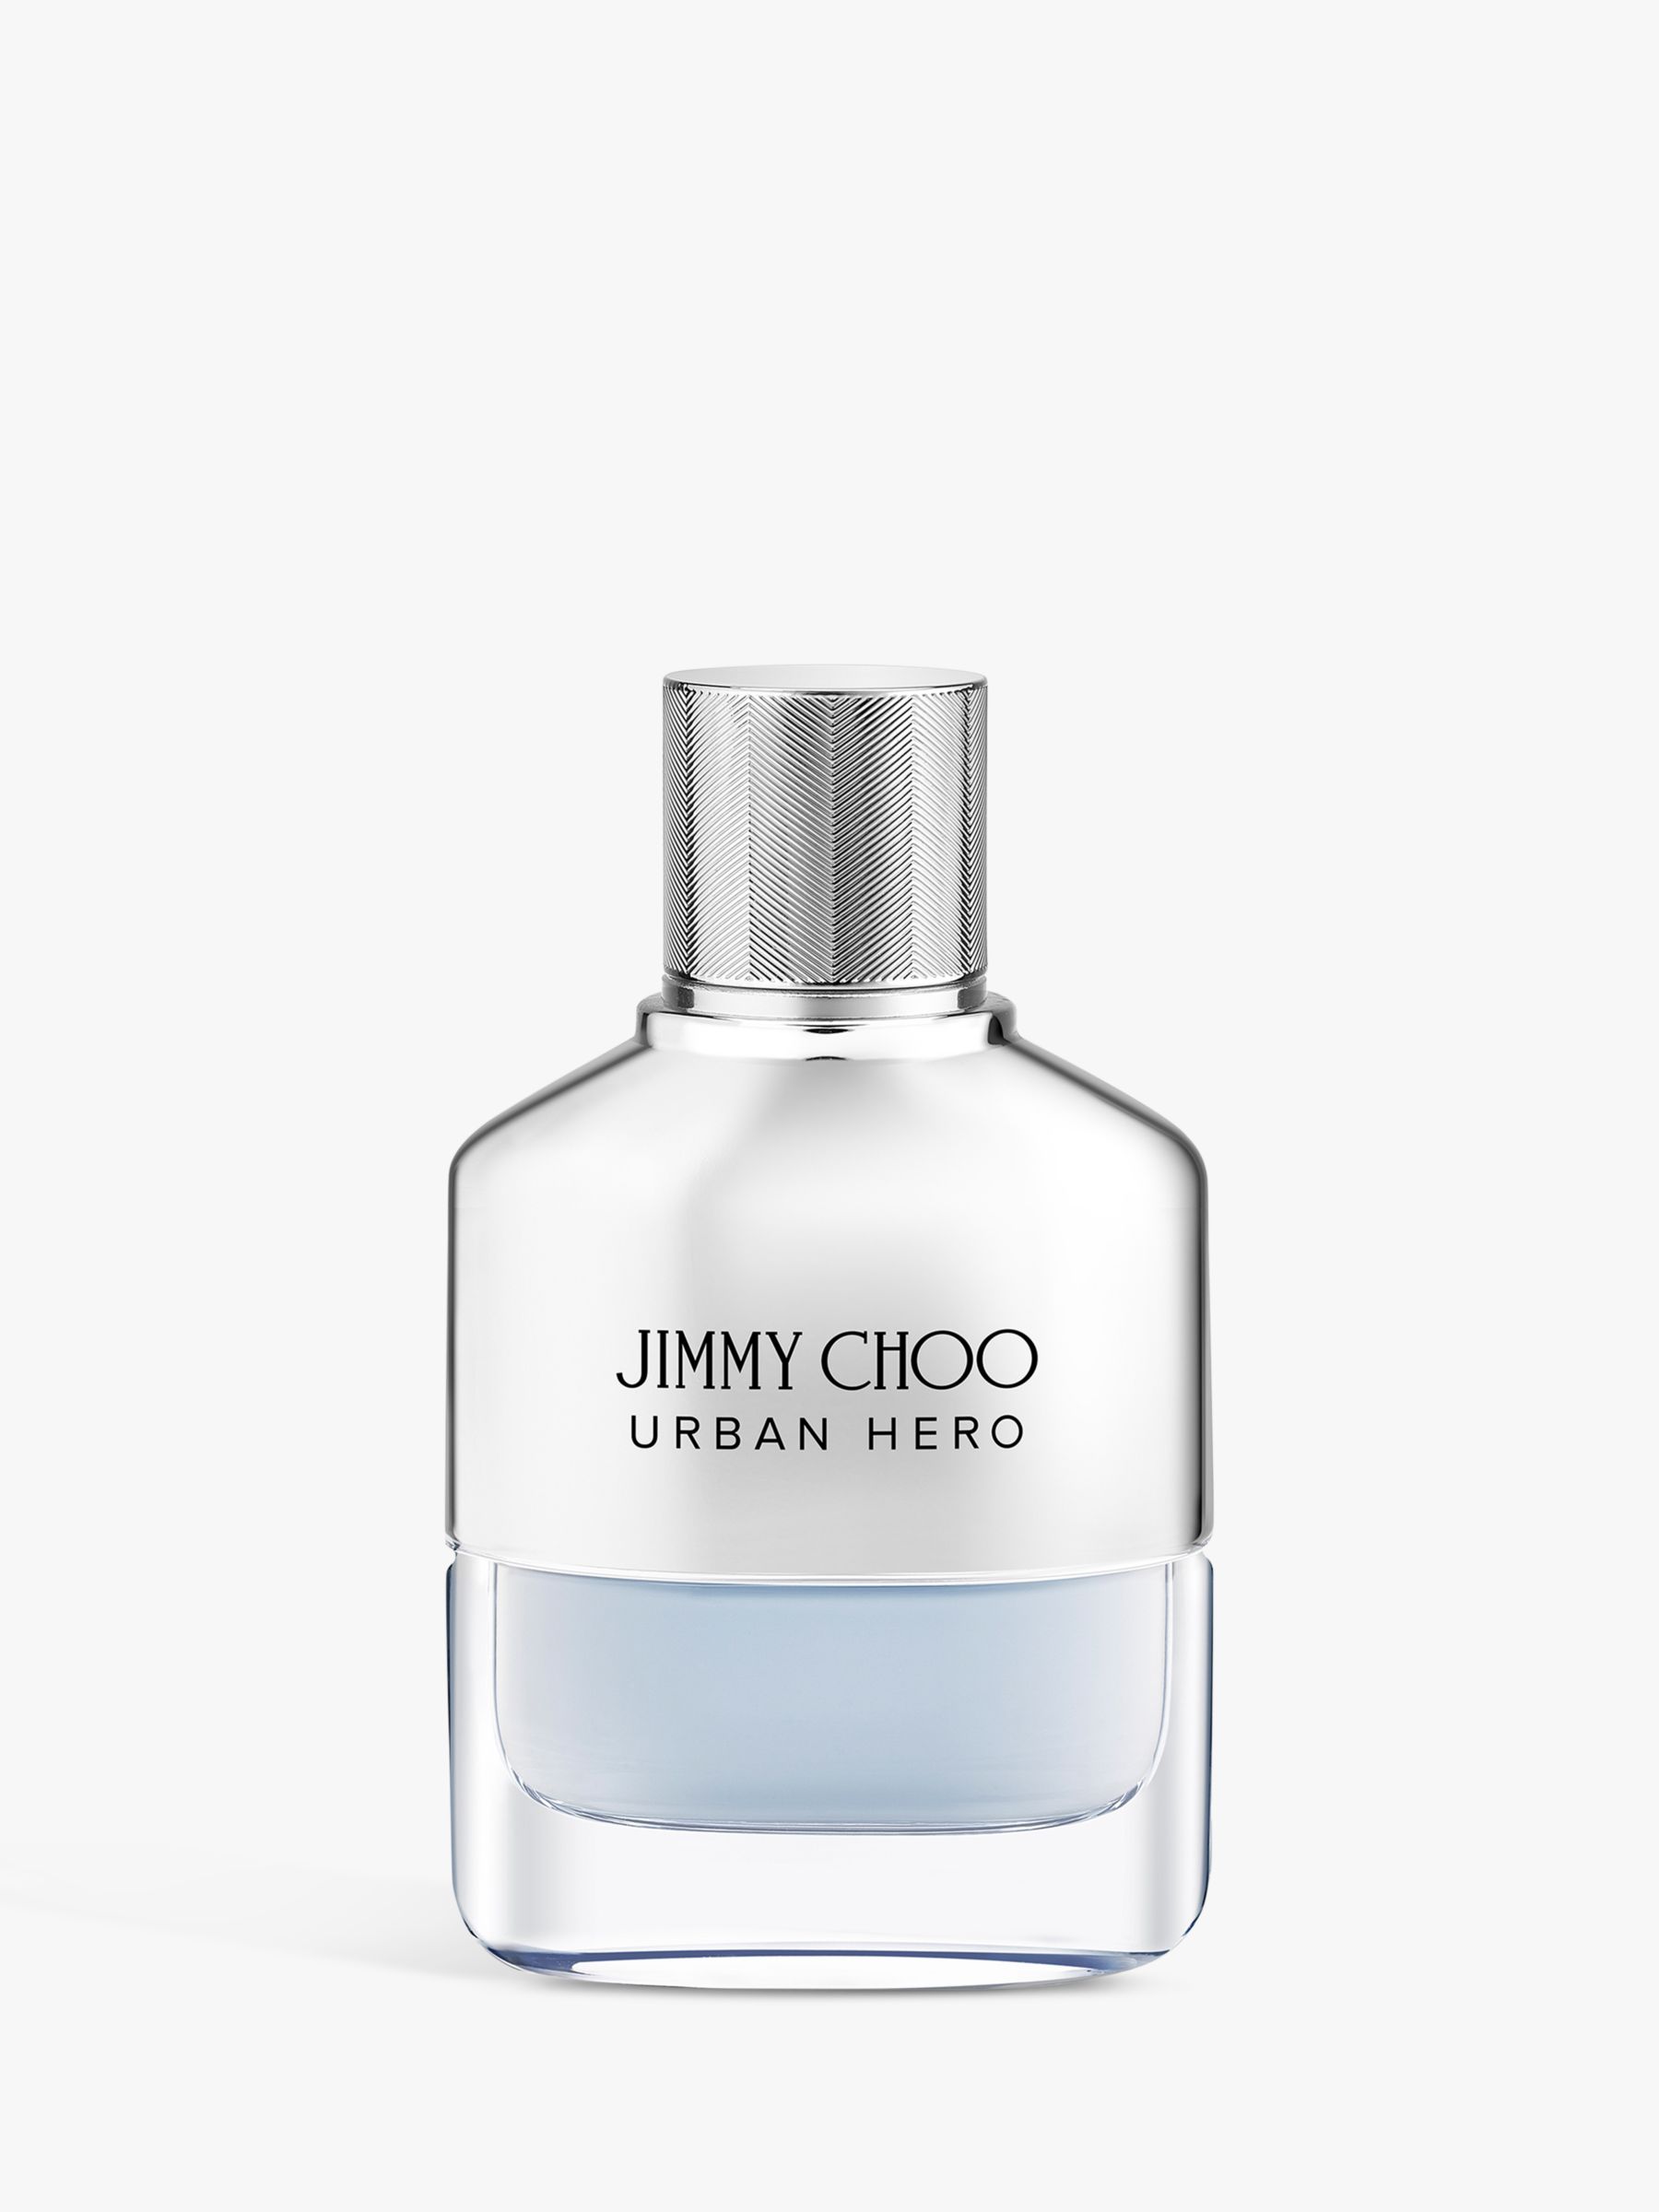 Jimmy Choo Urban Hero Eau de Parfum, 50ml